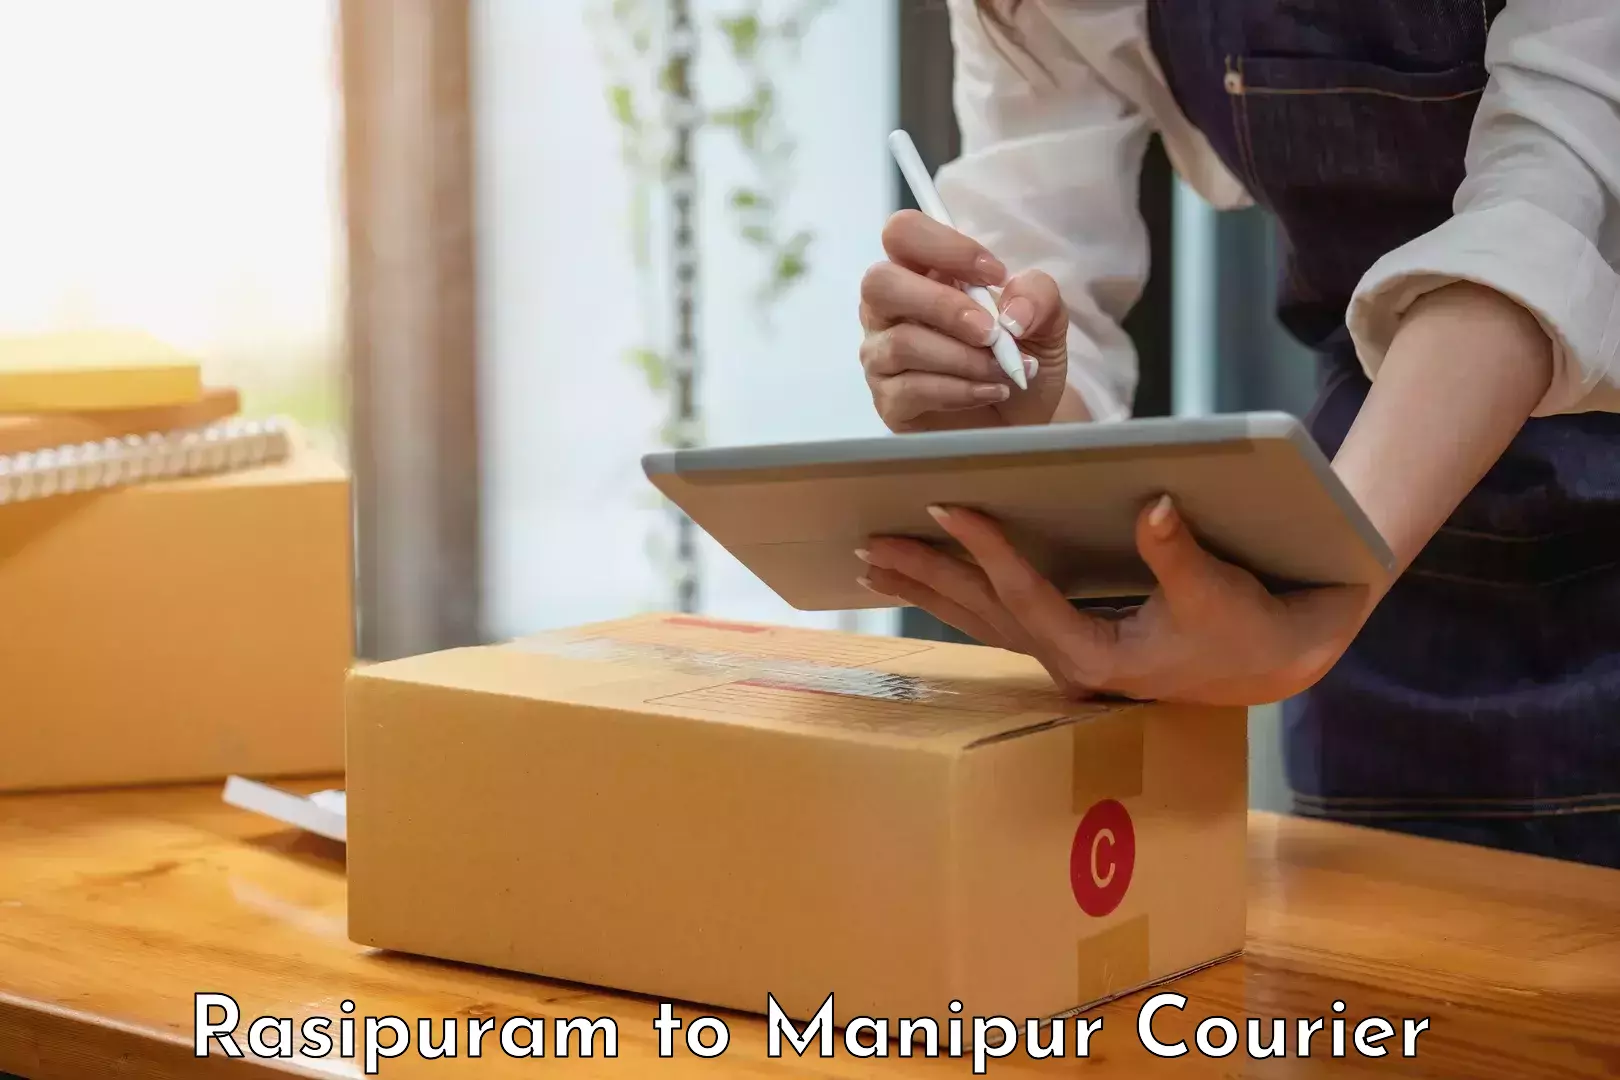 Cash on delivery service Rasipuram to Churachandpur